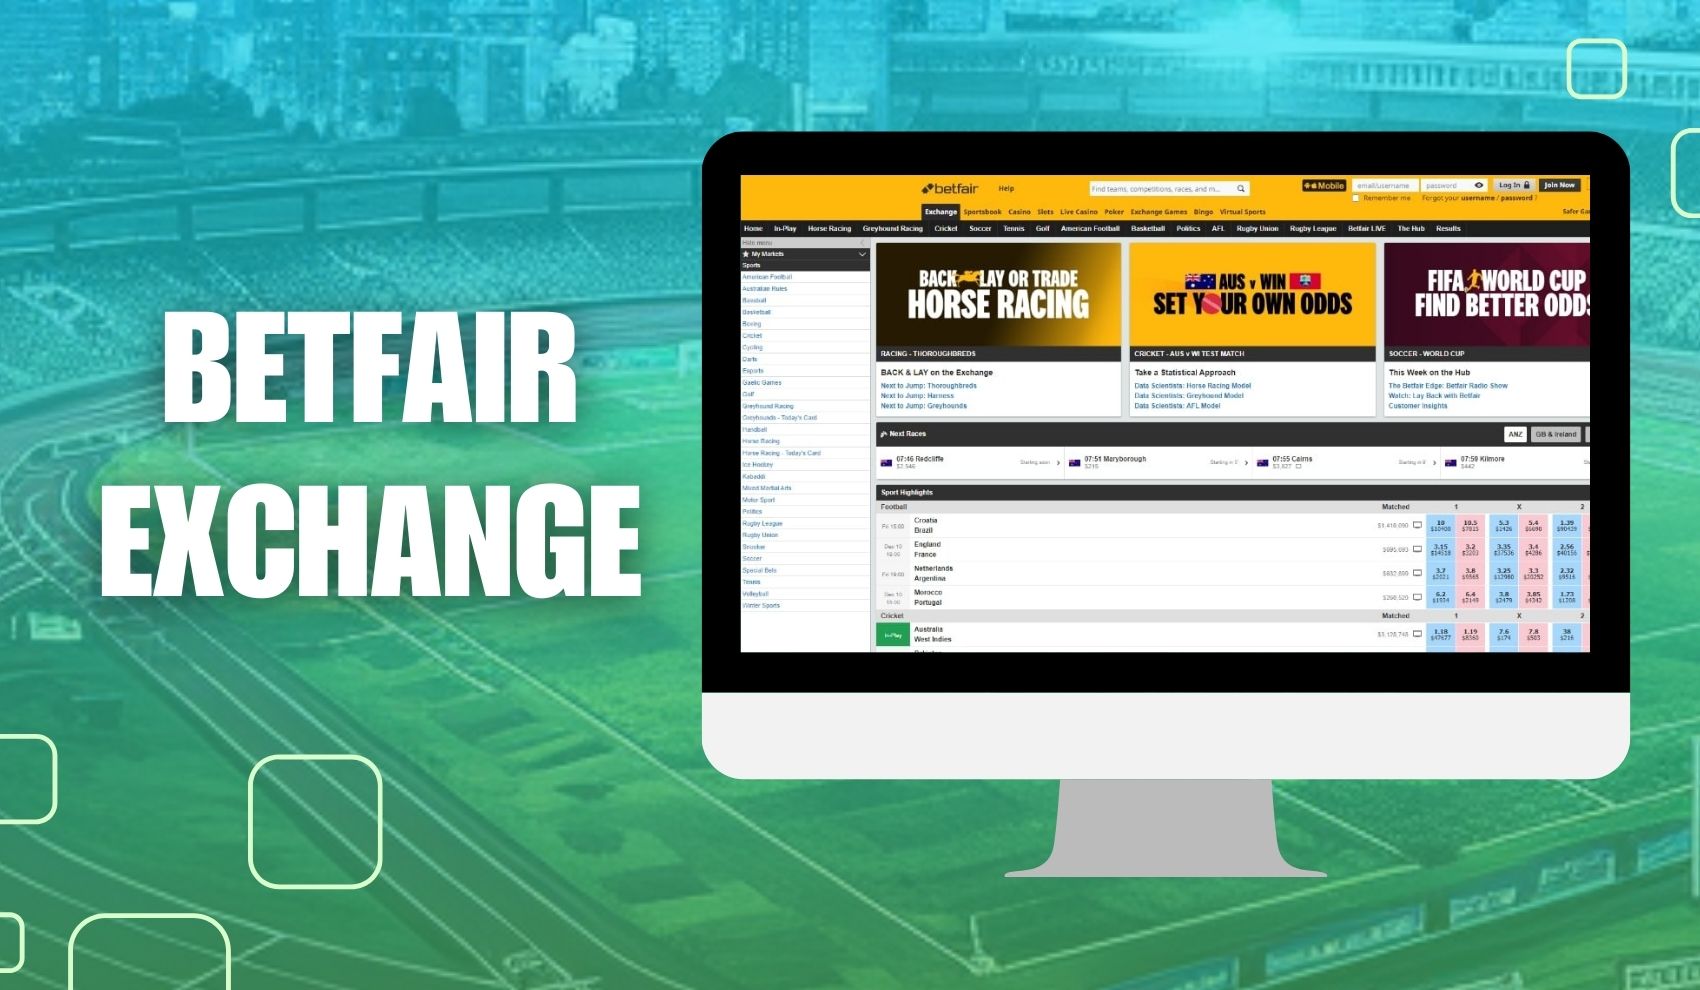 Betfair Online sports Betting exchange review